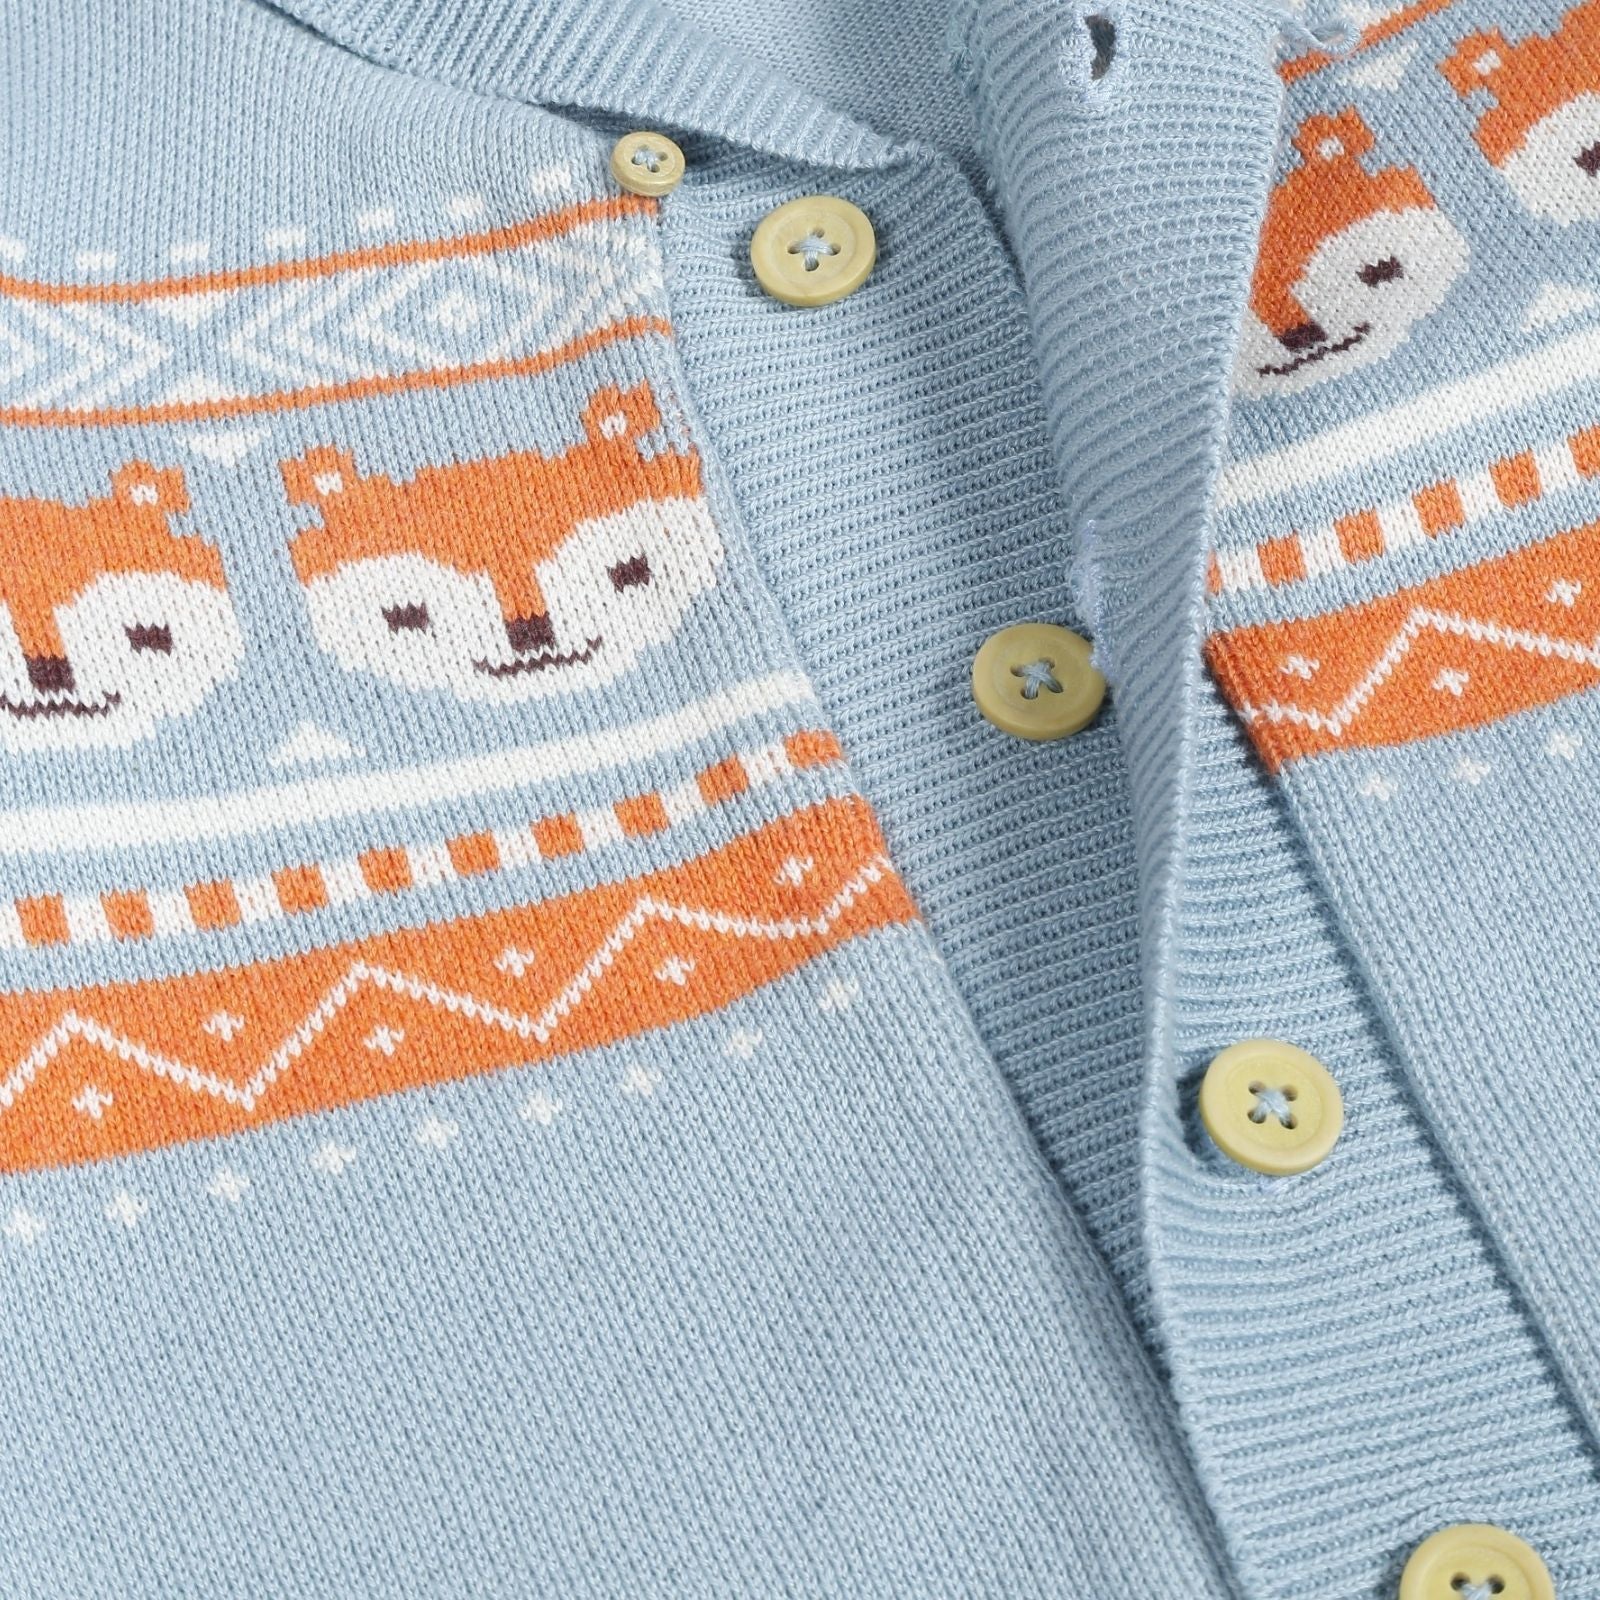 Greendeer Sunny Fox Jacquard 100% Cotton Sweater - Powder Blue & Orange